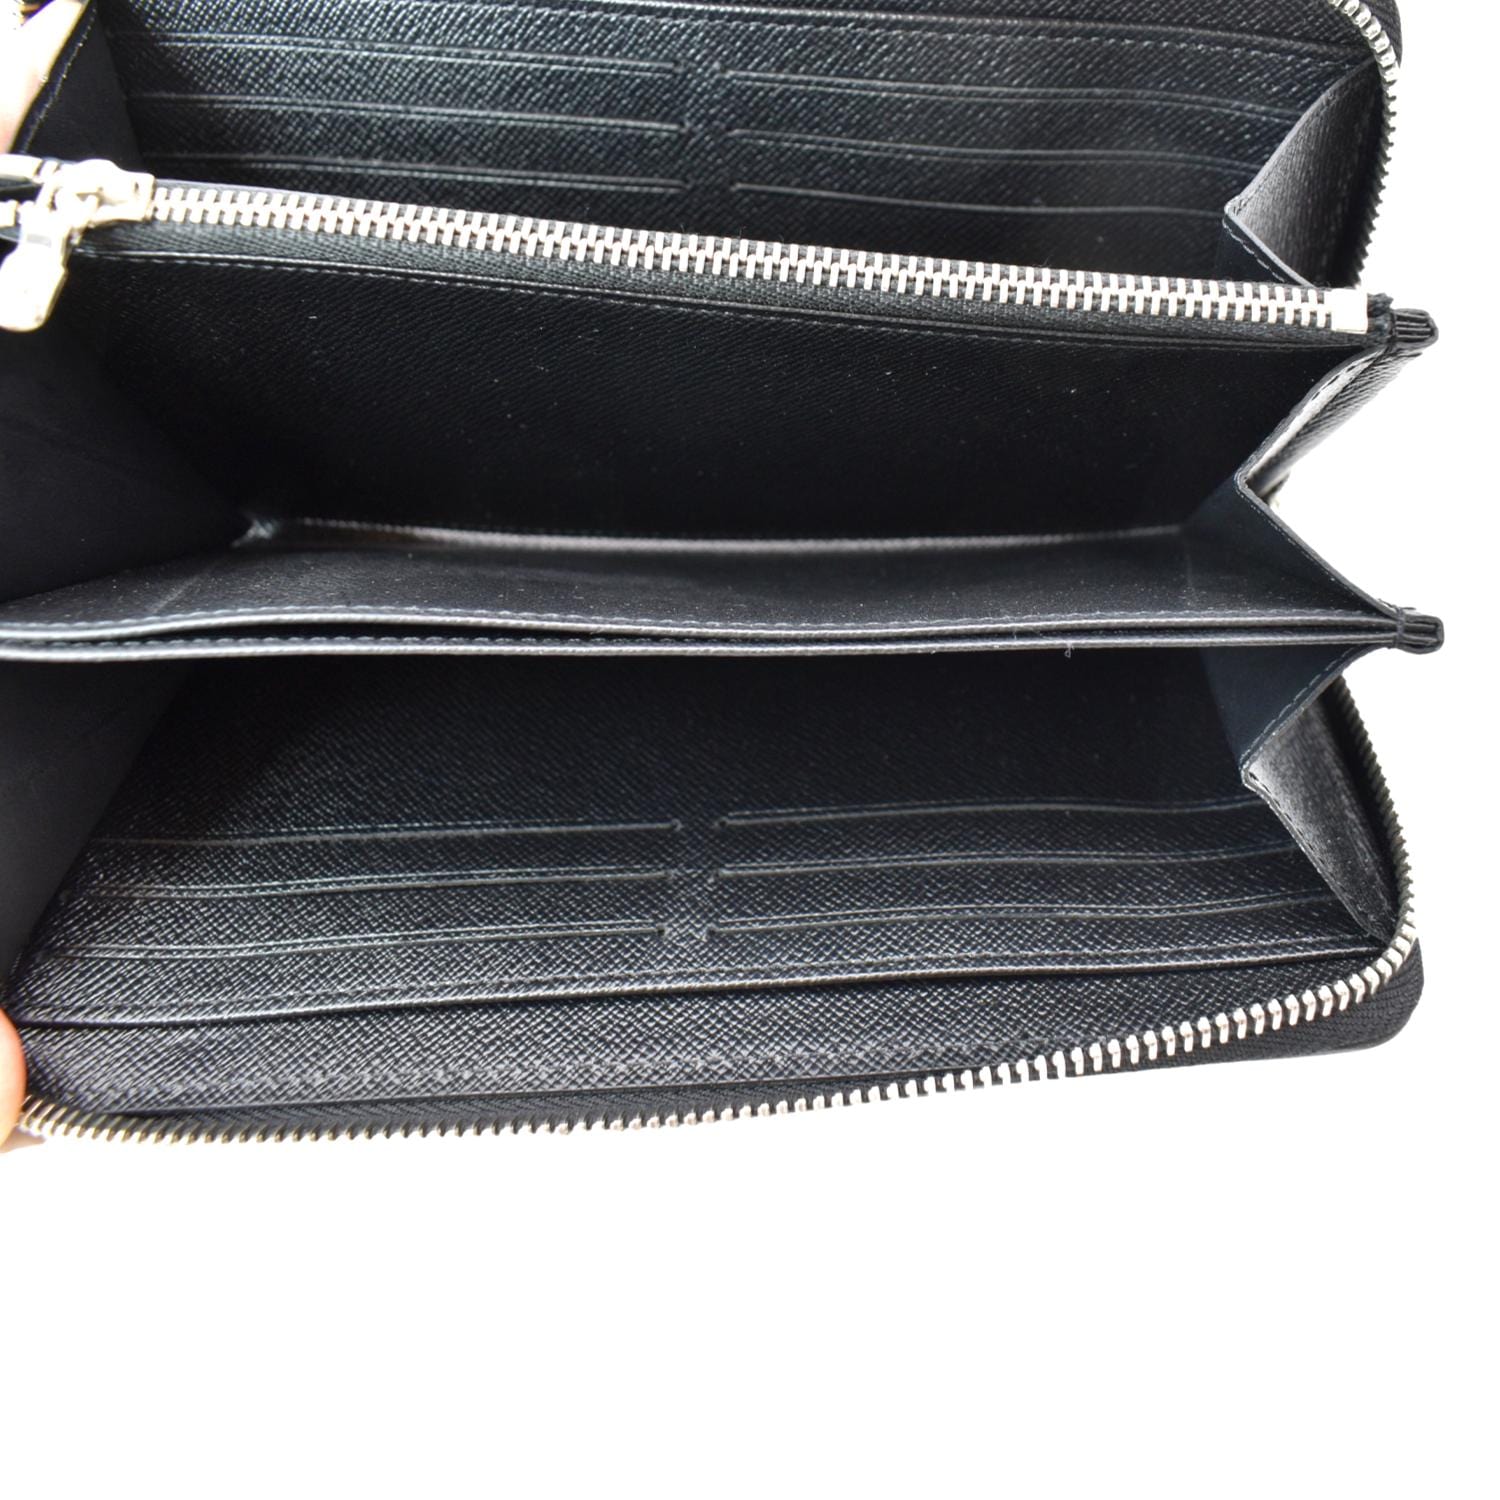 Louis Vuitton Epi Zippy Wallet in Black | MTYCI